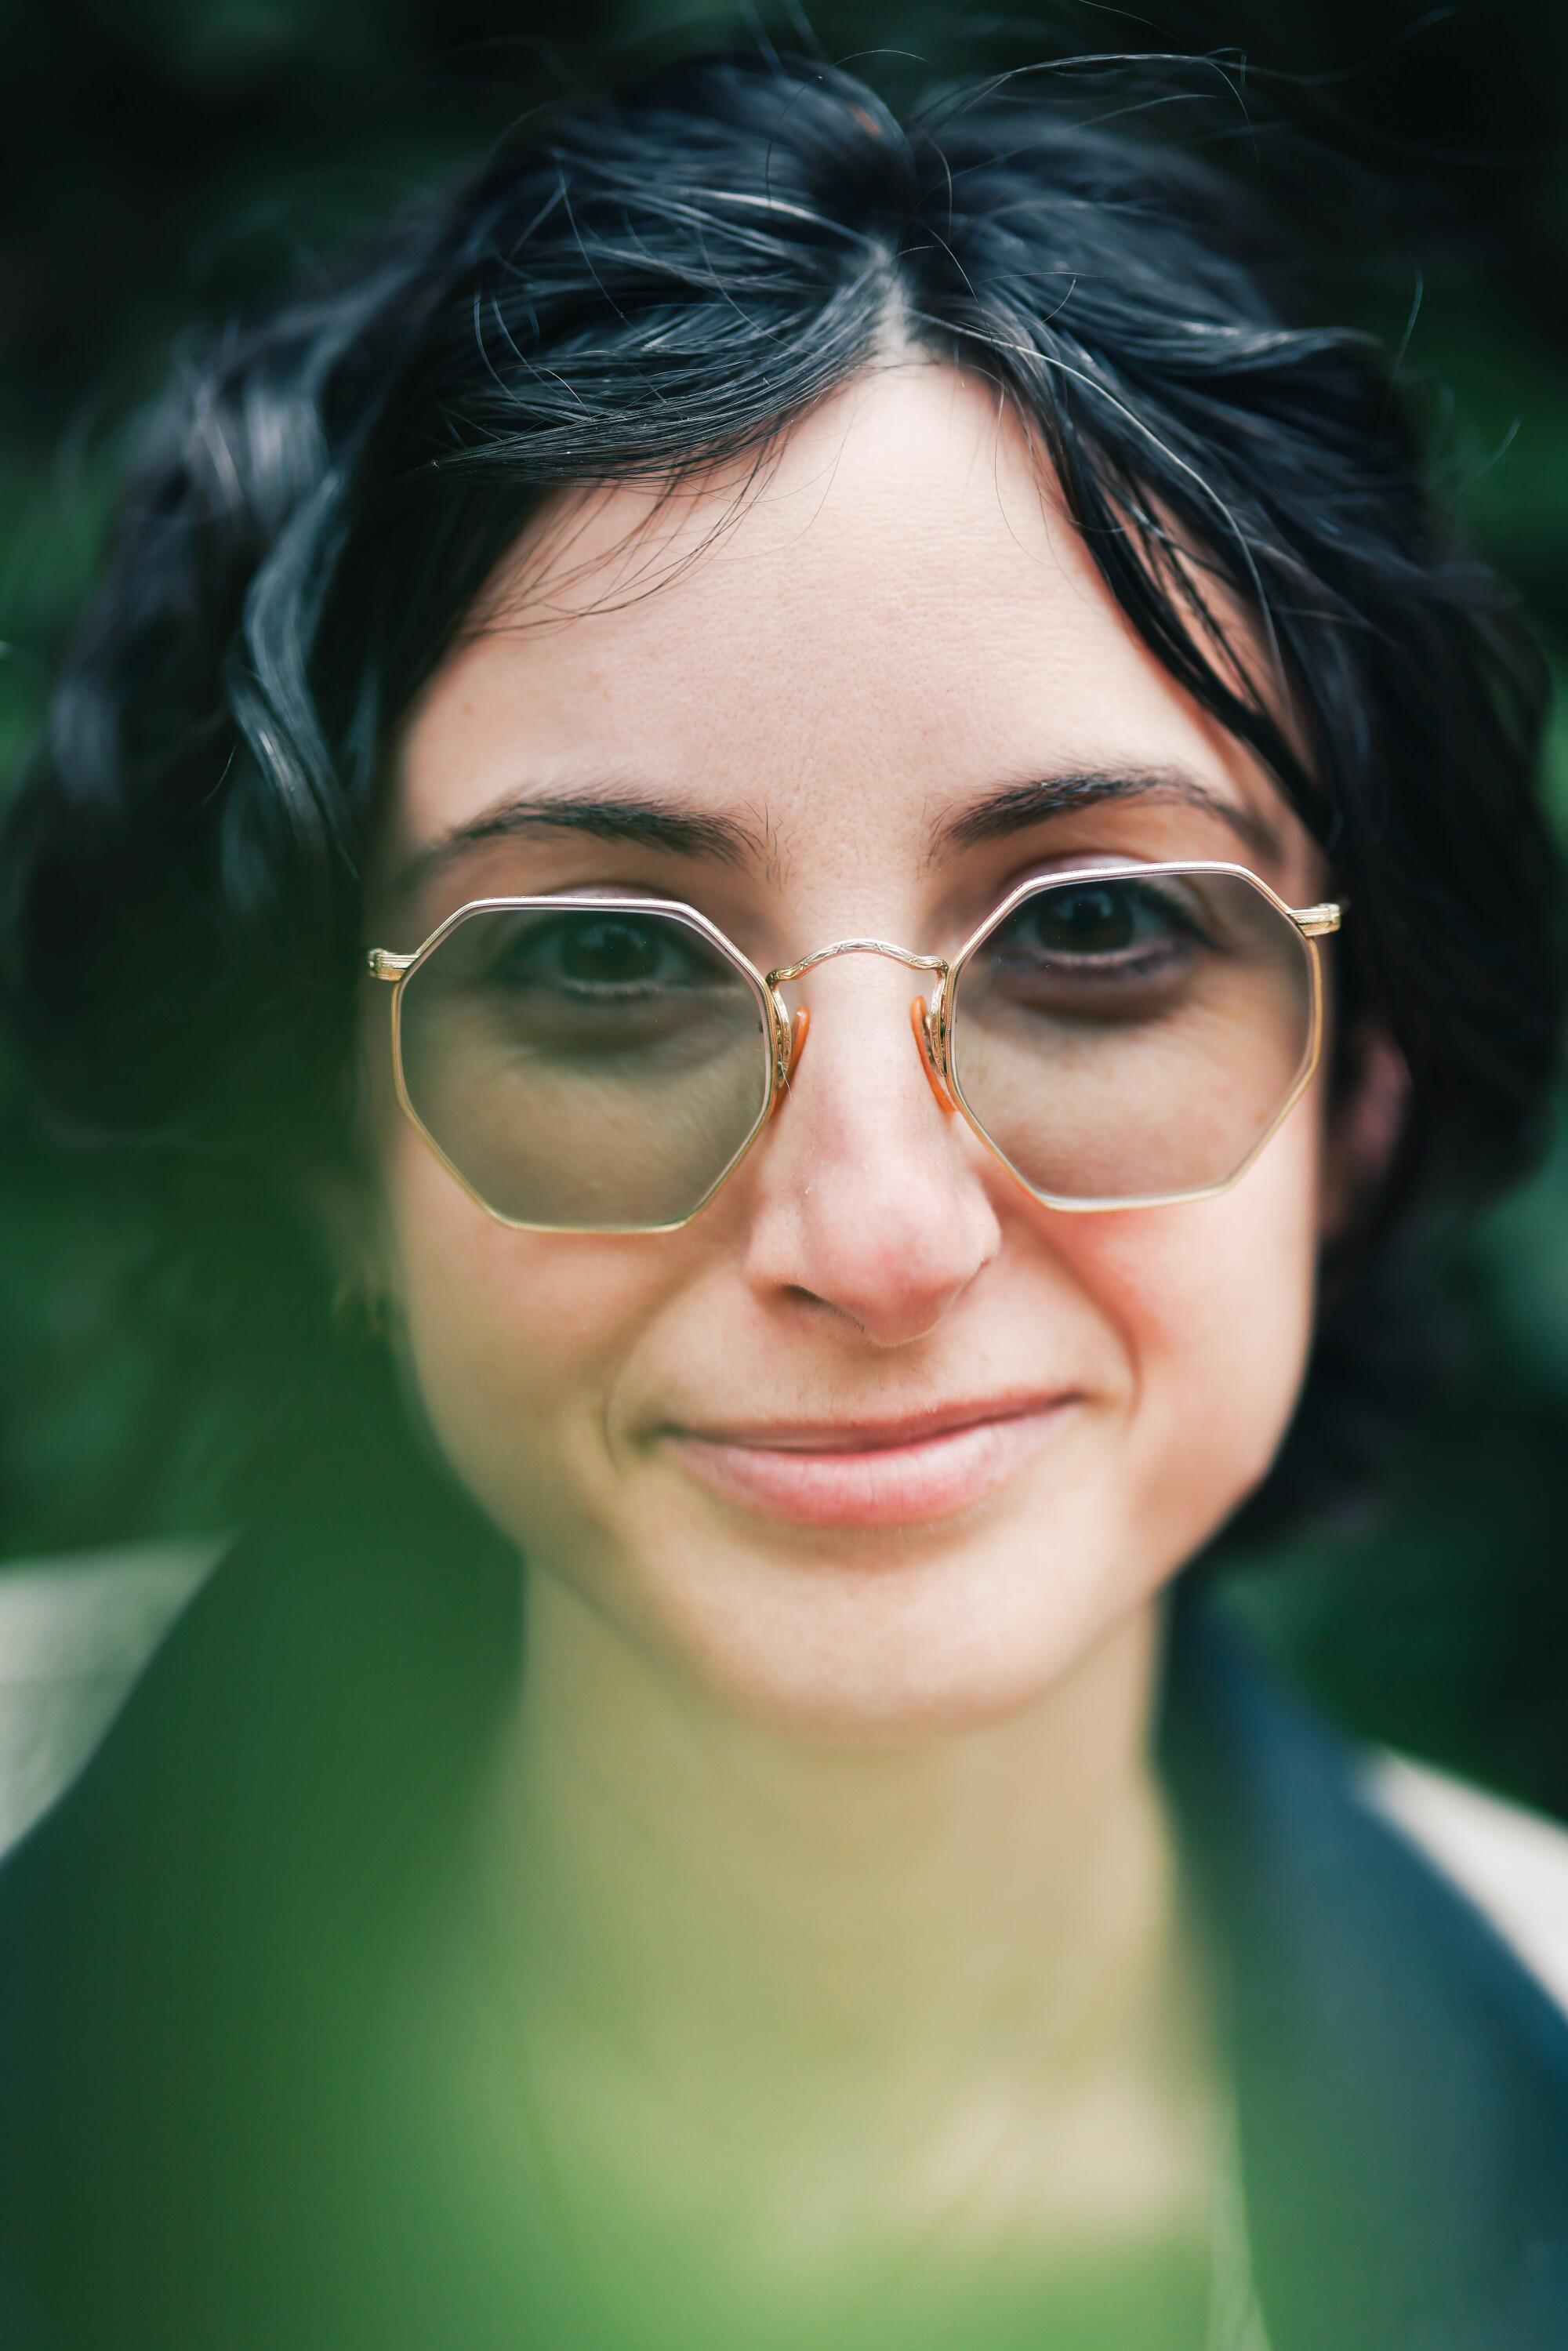 A slightly smiling woman wearing hexagonal sunglasses